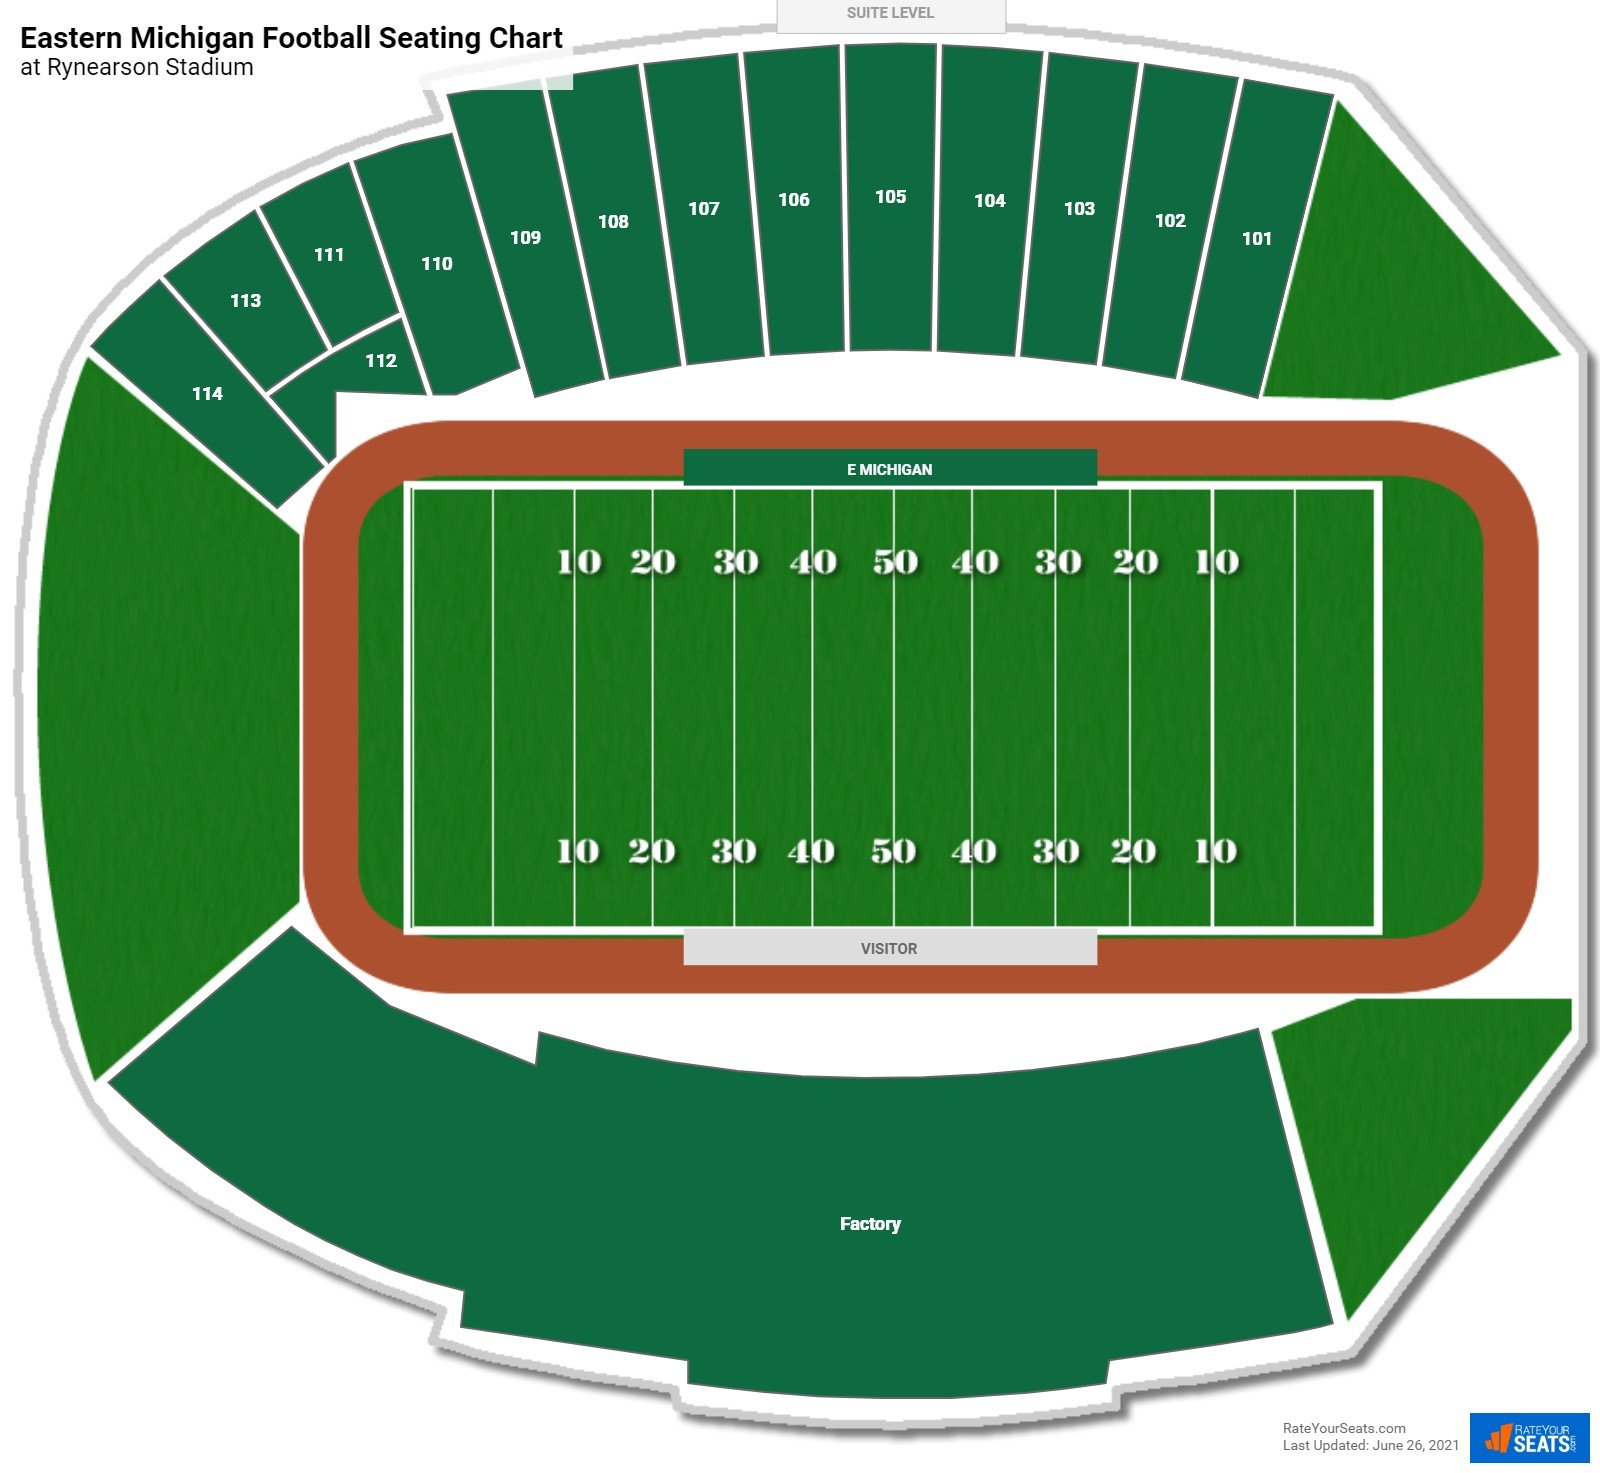 Eastern Michigan Eagles Seating Chart at Rynearson Stadium